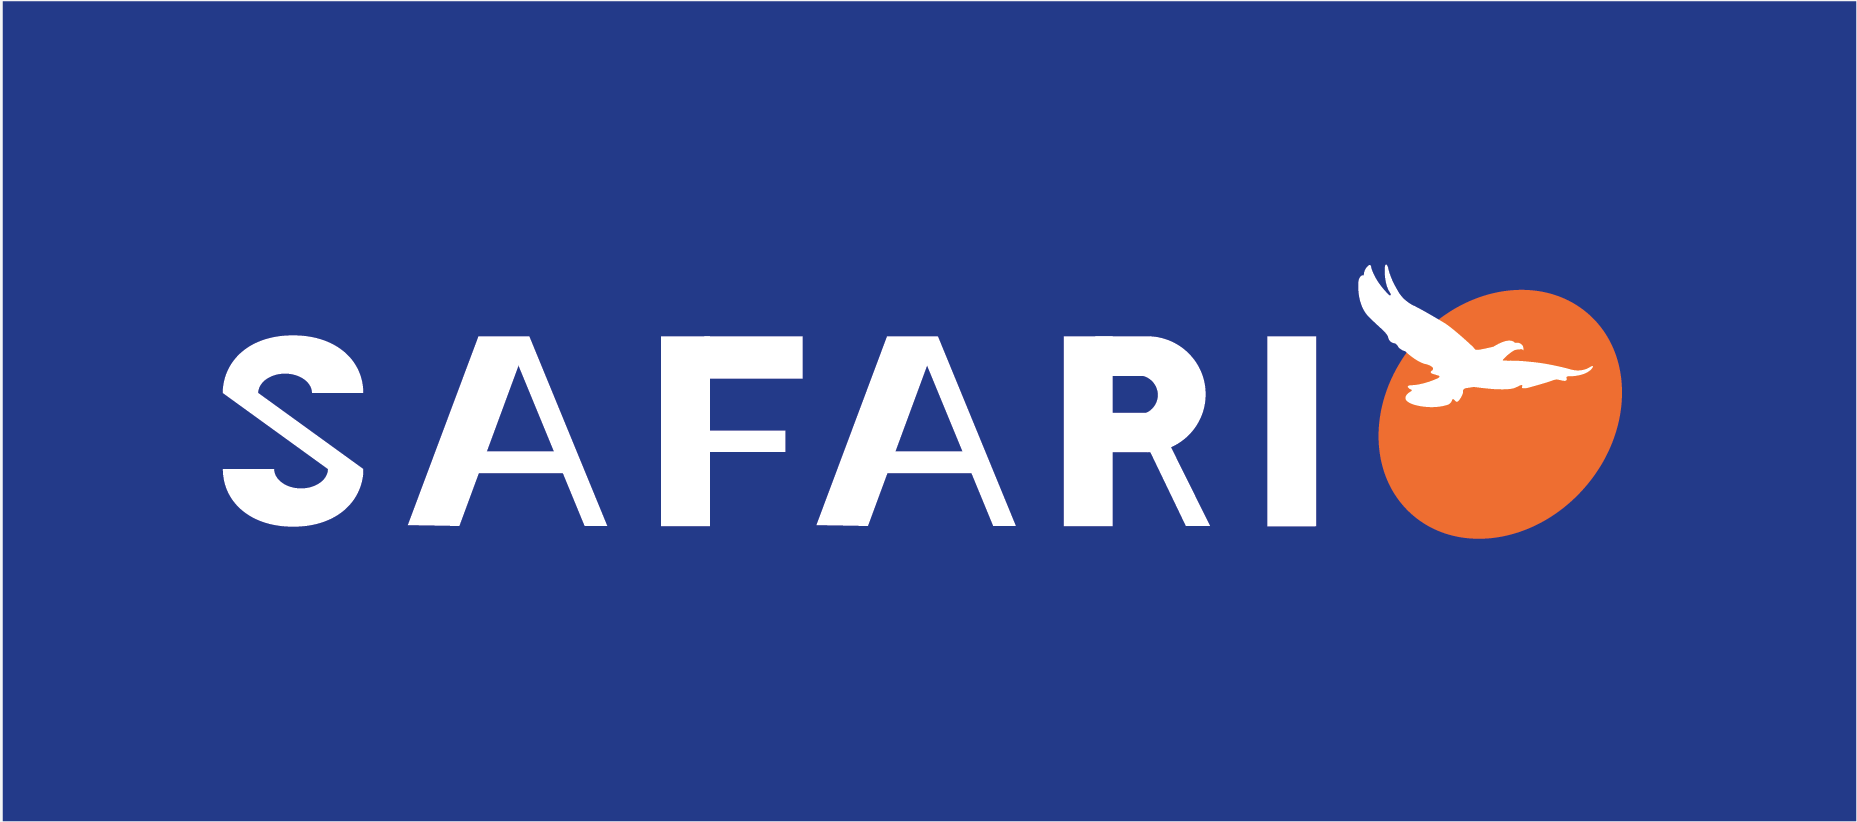 safari luggage company wiki